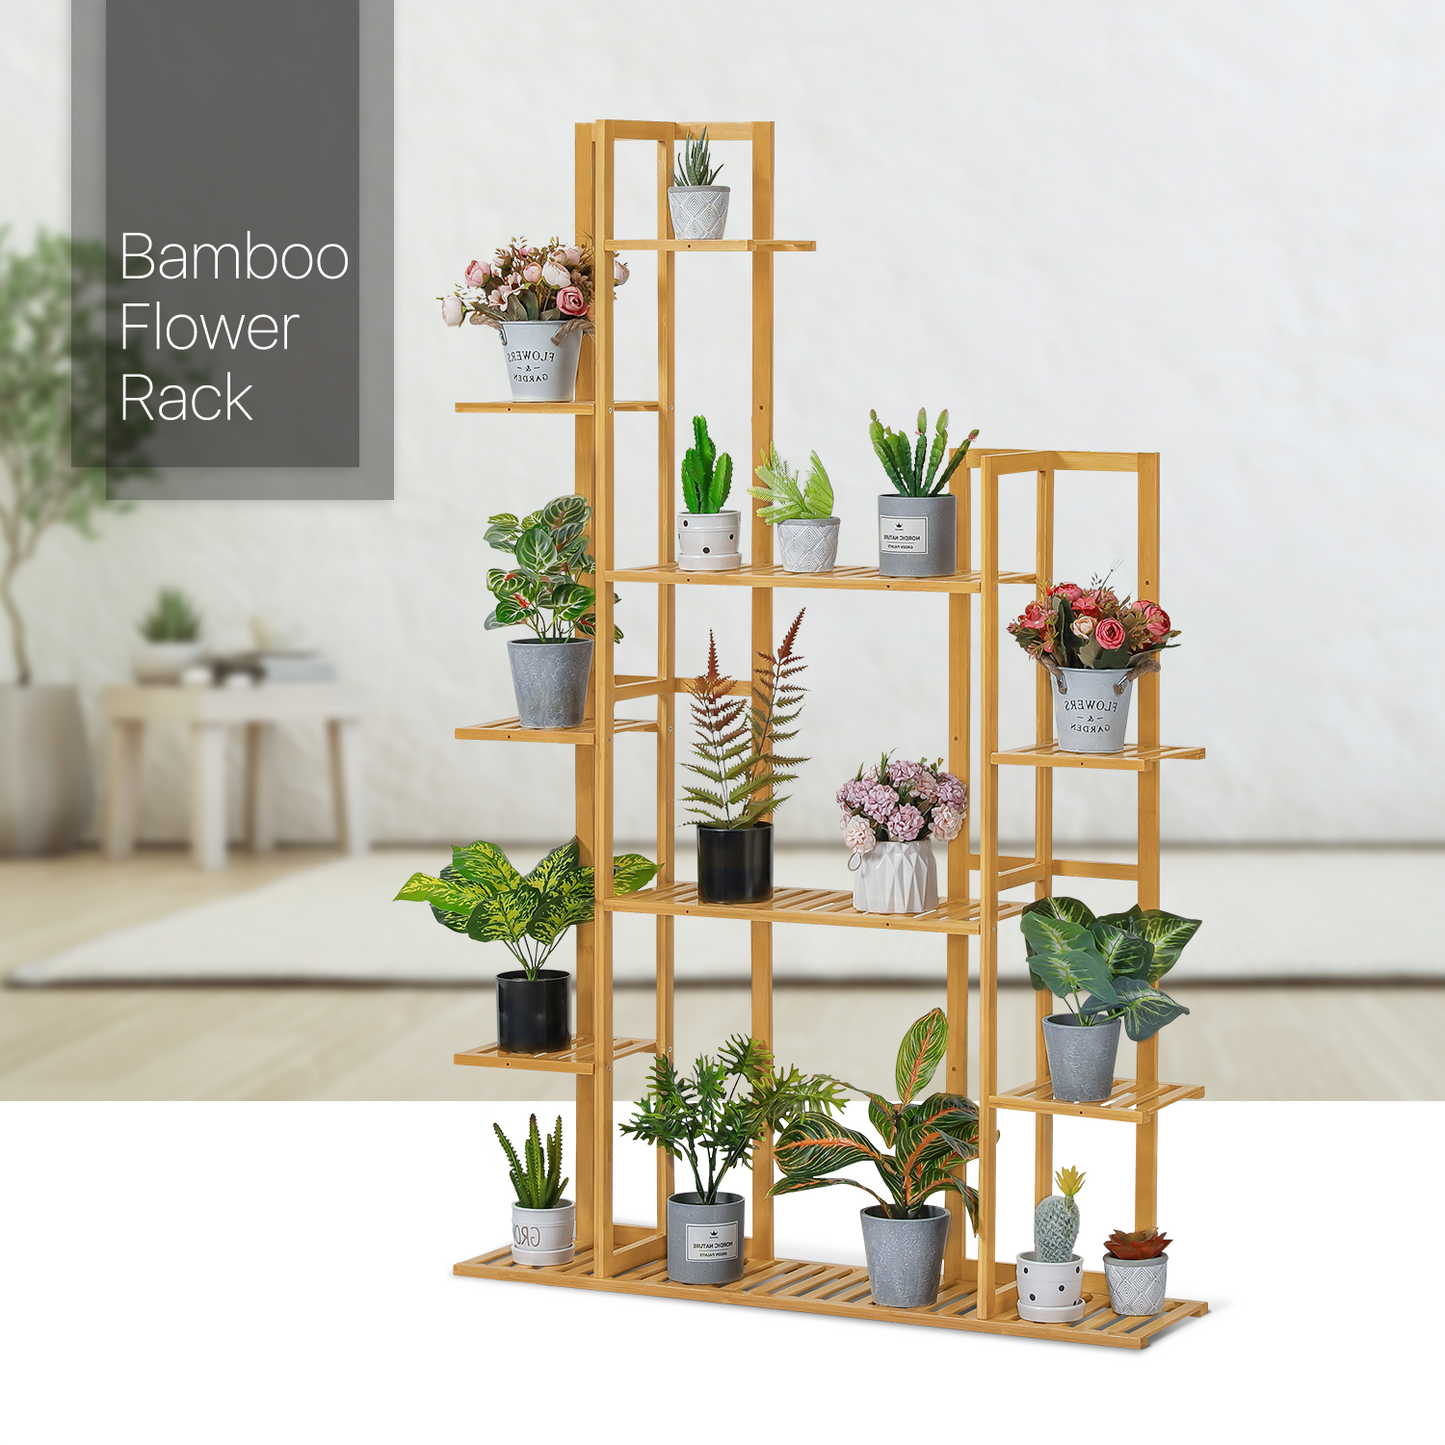 Flower Plant Stand Display Shelf - 14 Potted Plant Holder - Natural